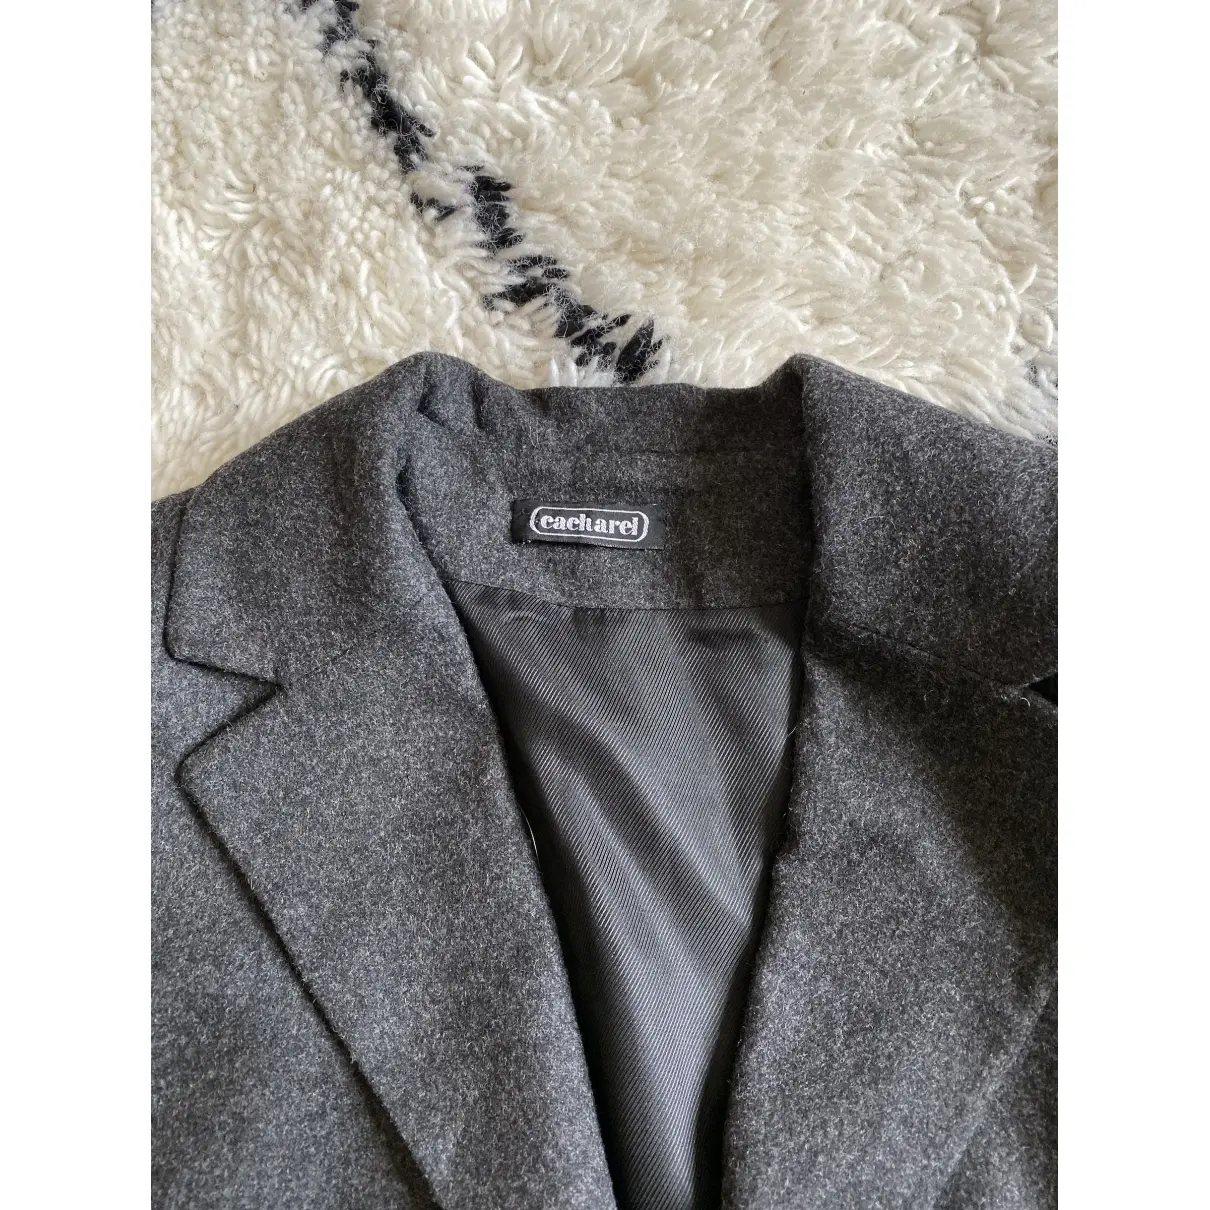 Buy Cacharel Wool jacket online